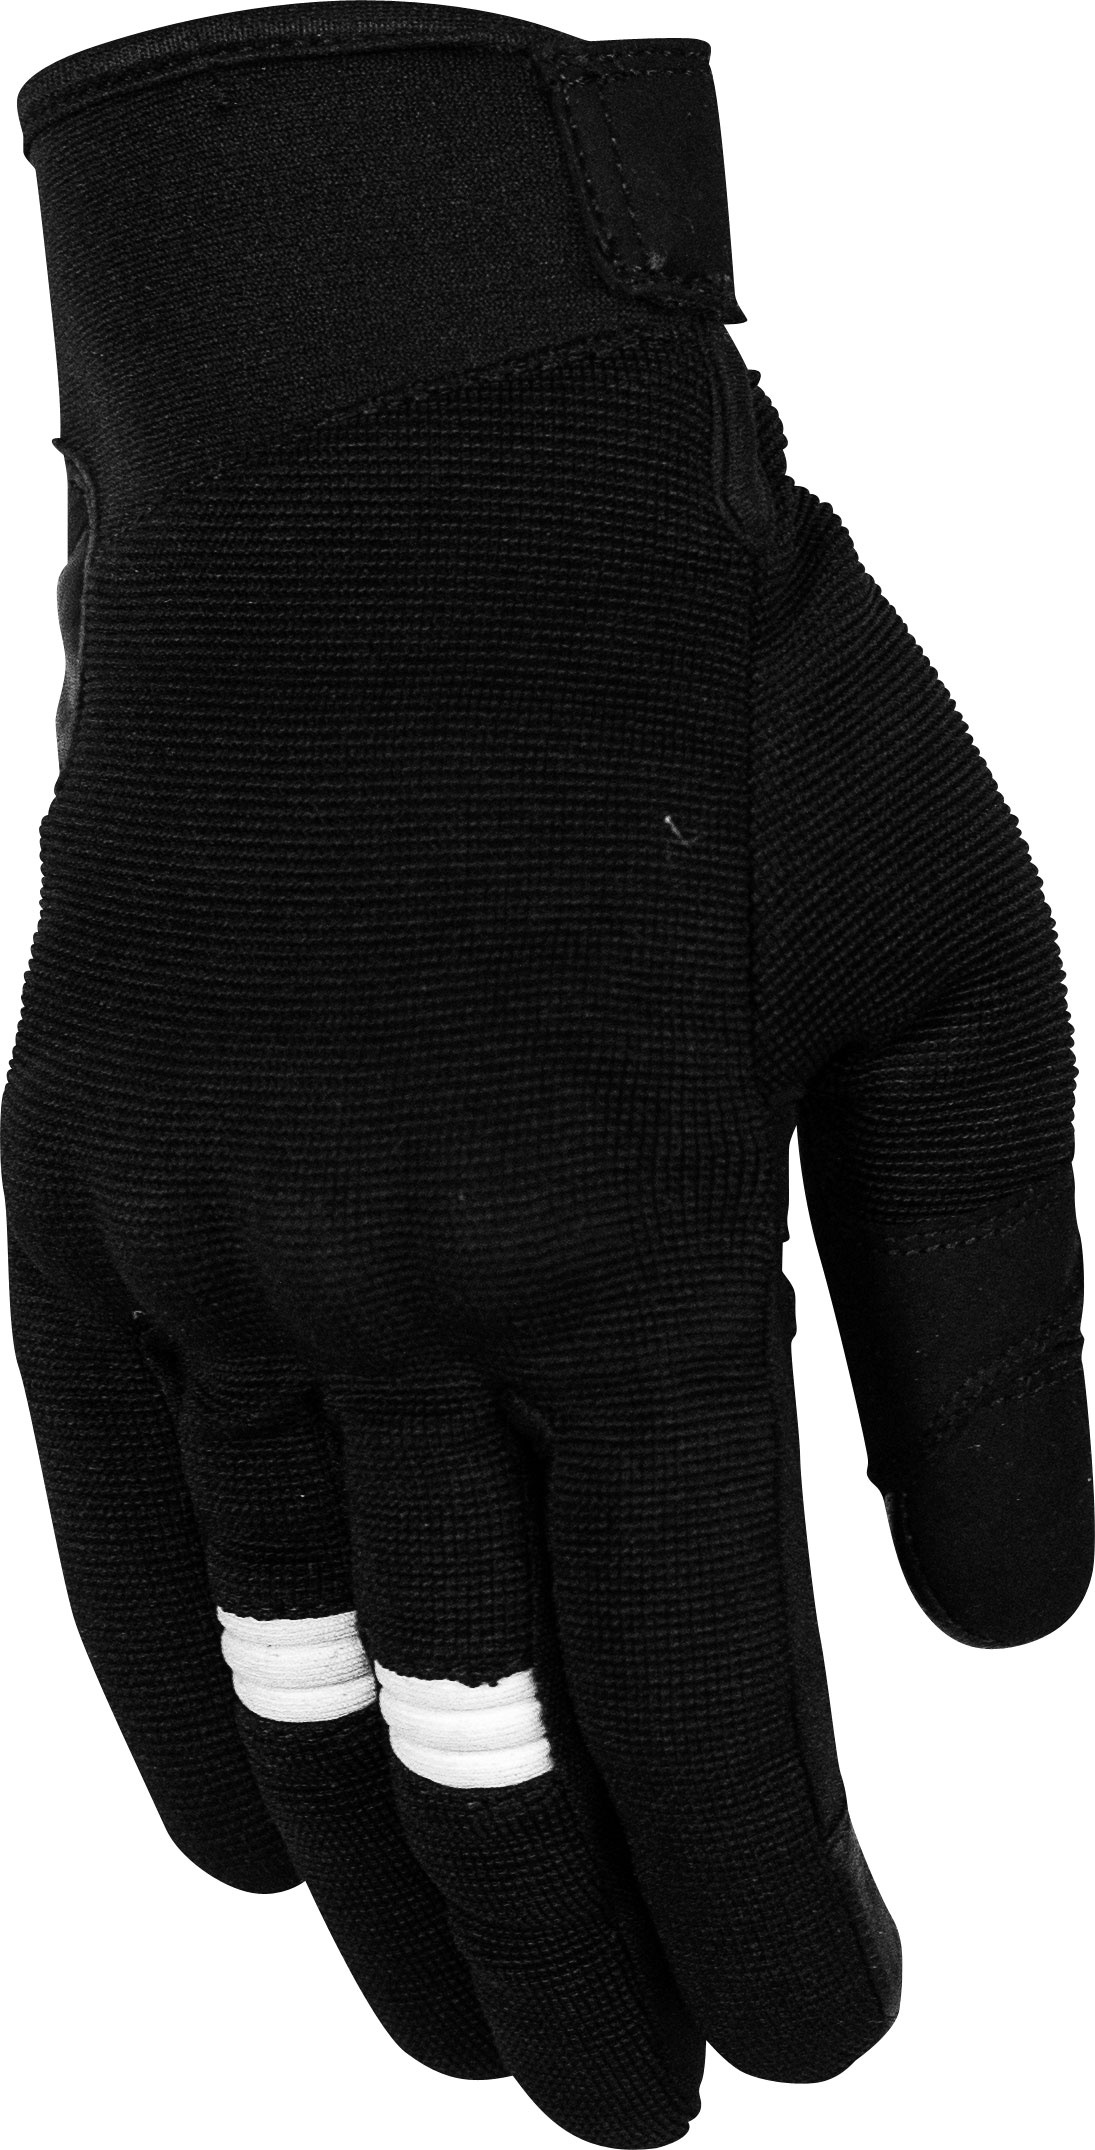 Rusty Stitches Bonnie V2, gants femmes - Noir/Blanc - S